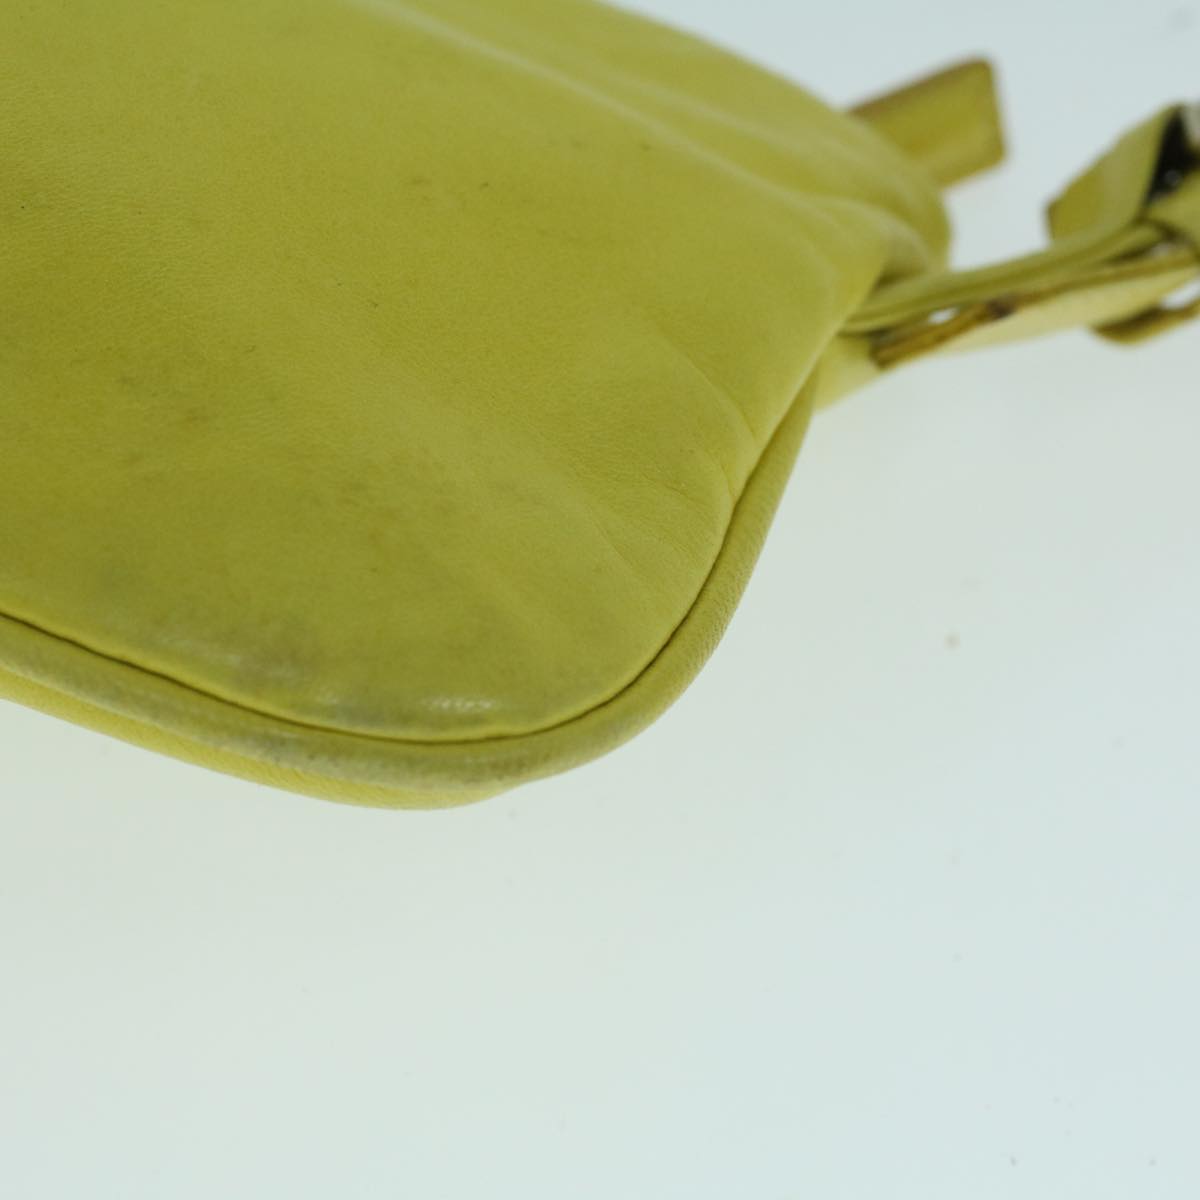 FENDI Mamma Baguette Shoulder Bag Leather Yellow 2354 26685 008 Auth bs9132